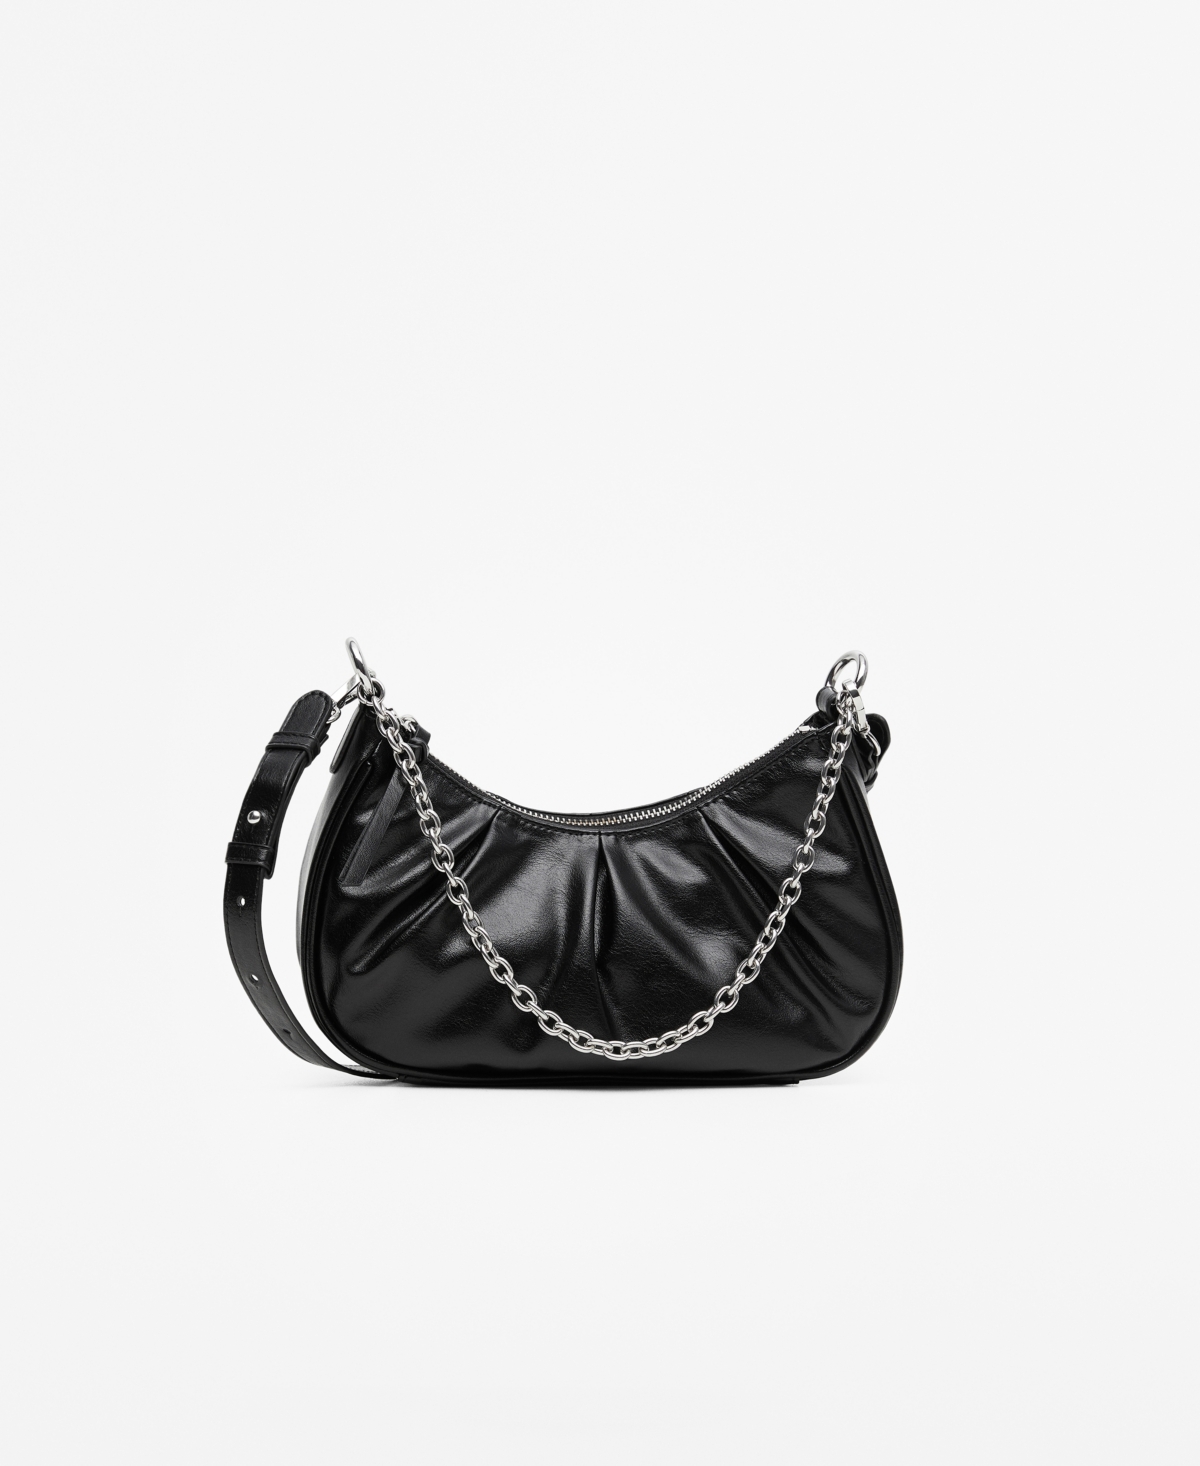 Mango Alba Chain Strap Cross Body Bag, Black, One Size